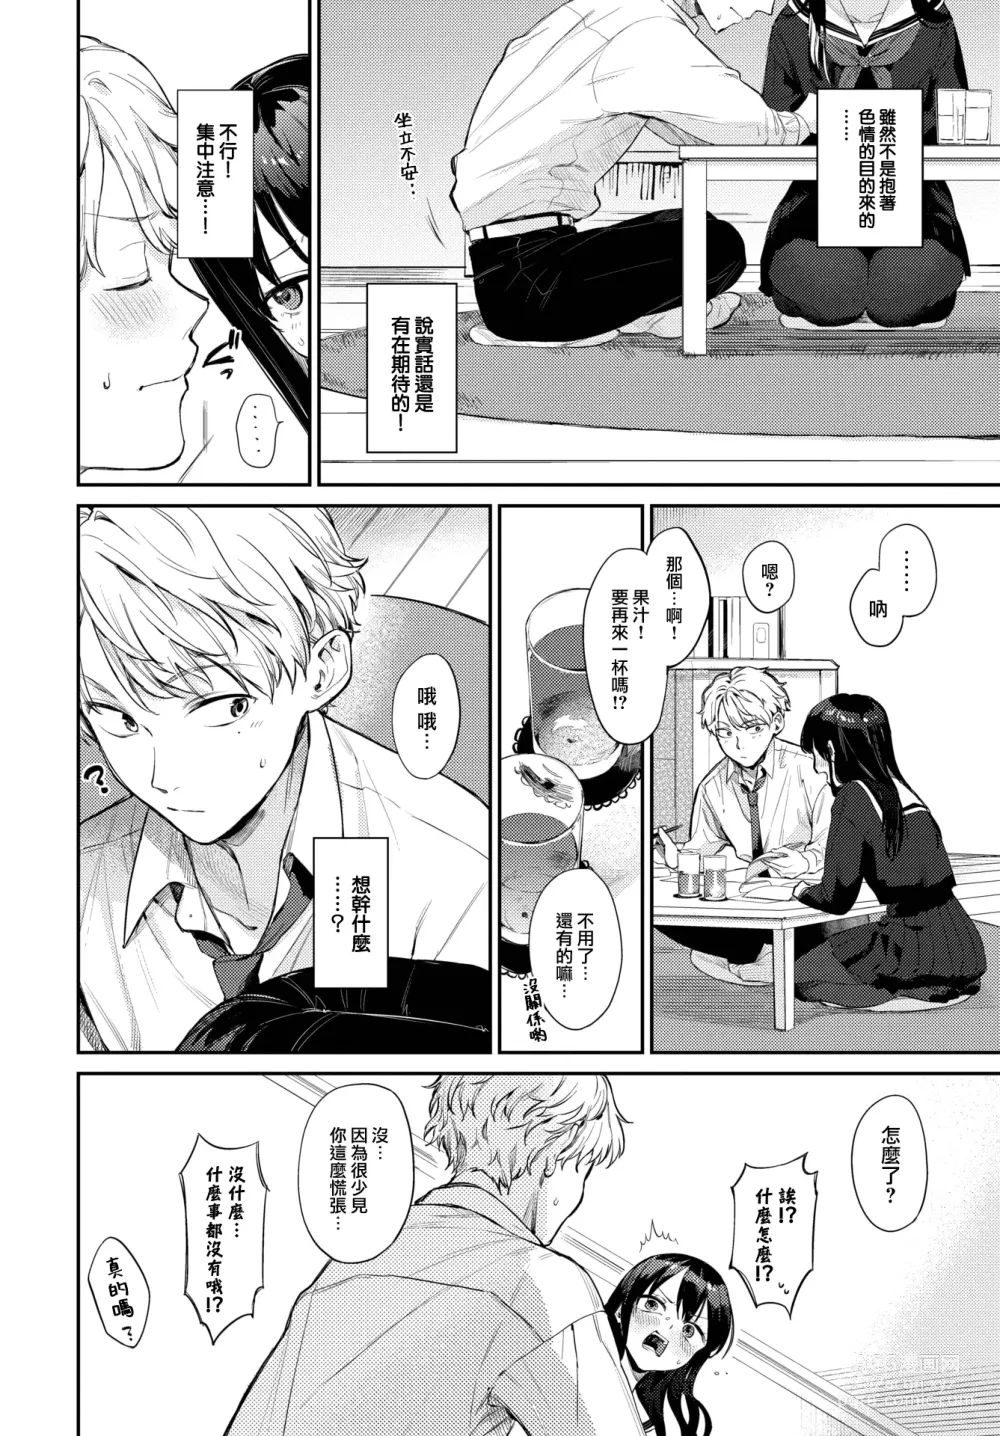 Page 5 of manga Muttsuri Bloom